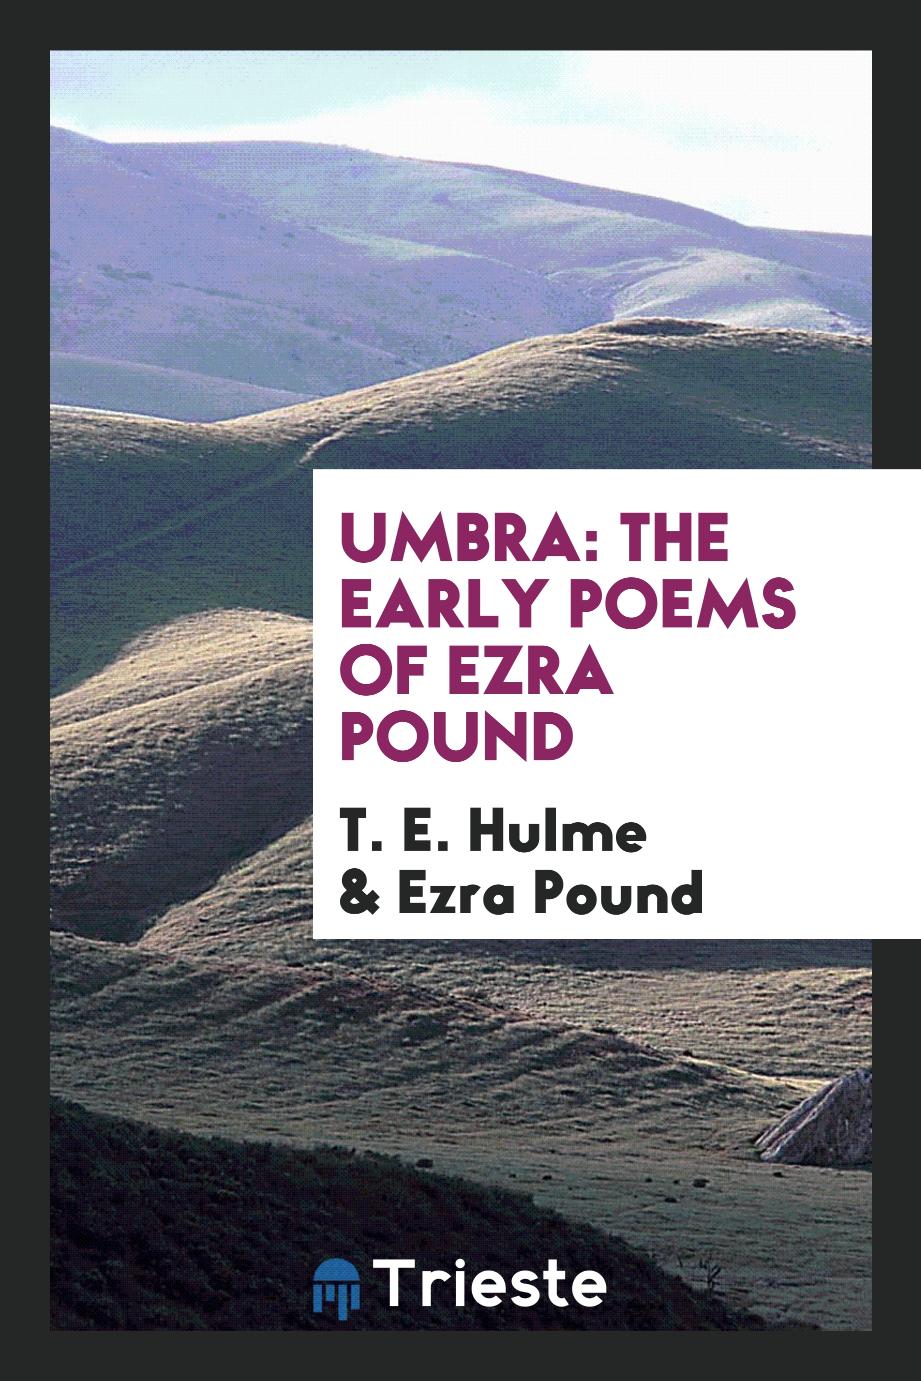 Umbra: the early poems of Ezra Pound